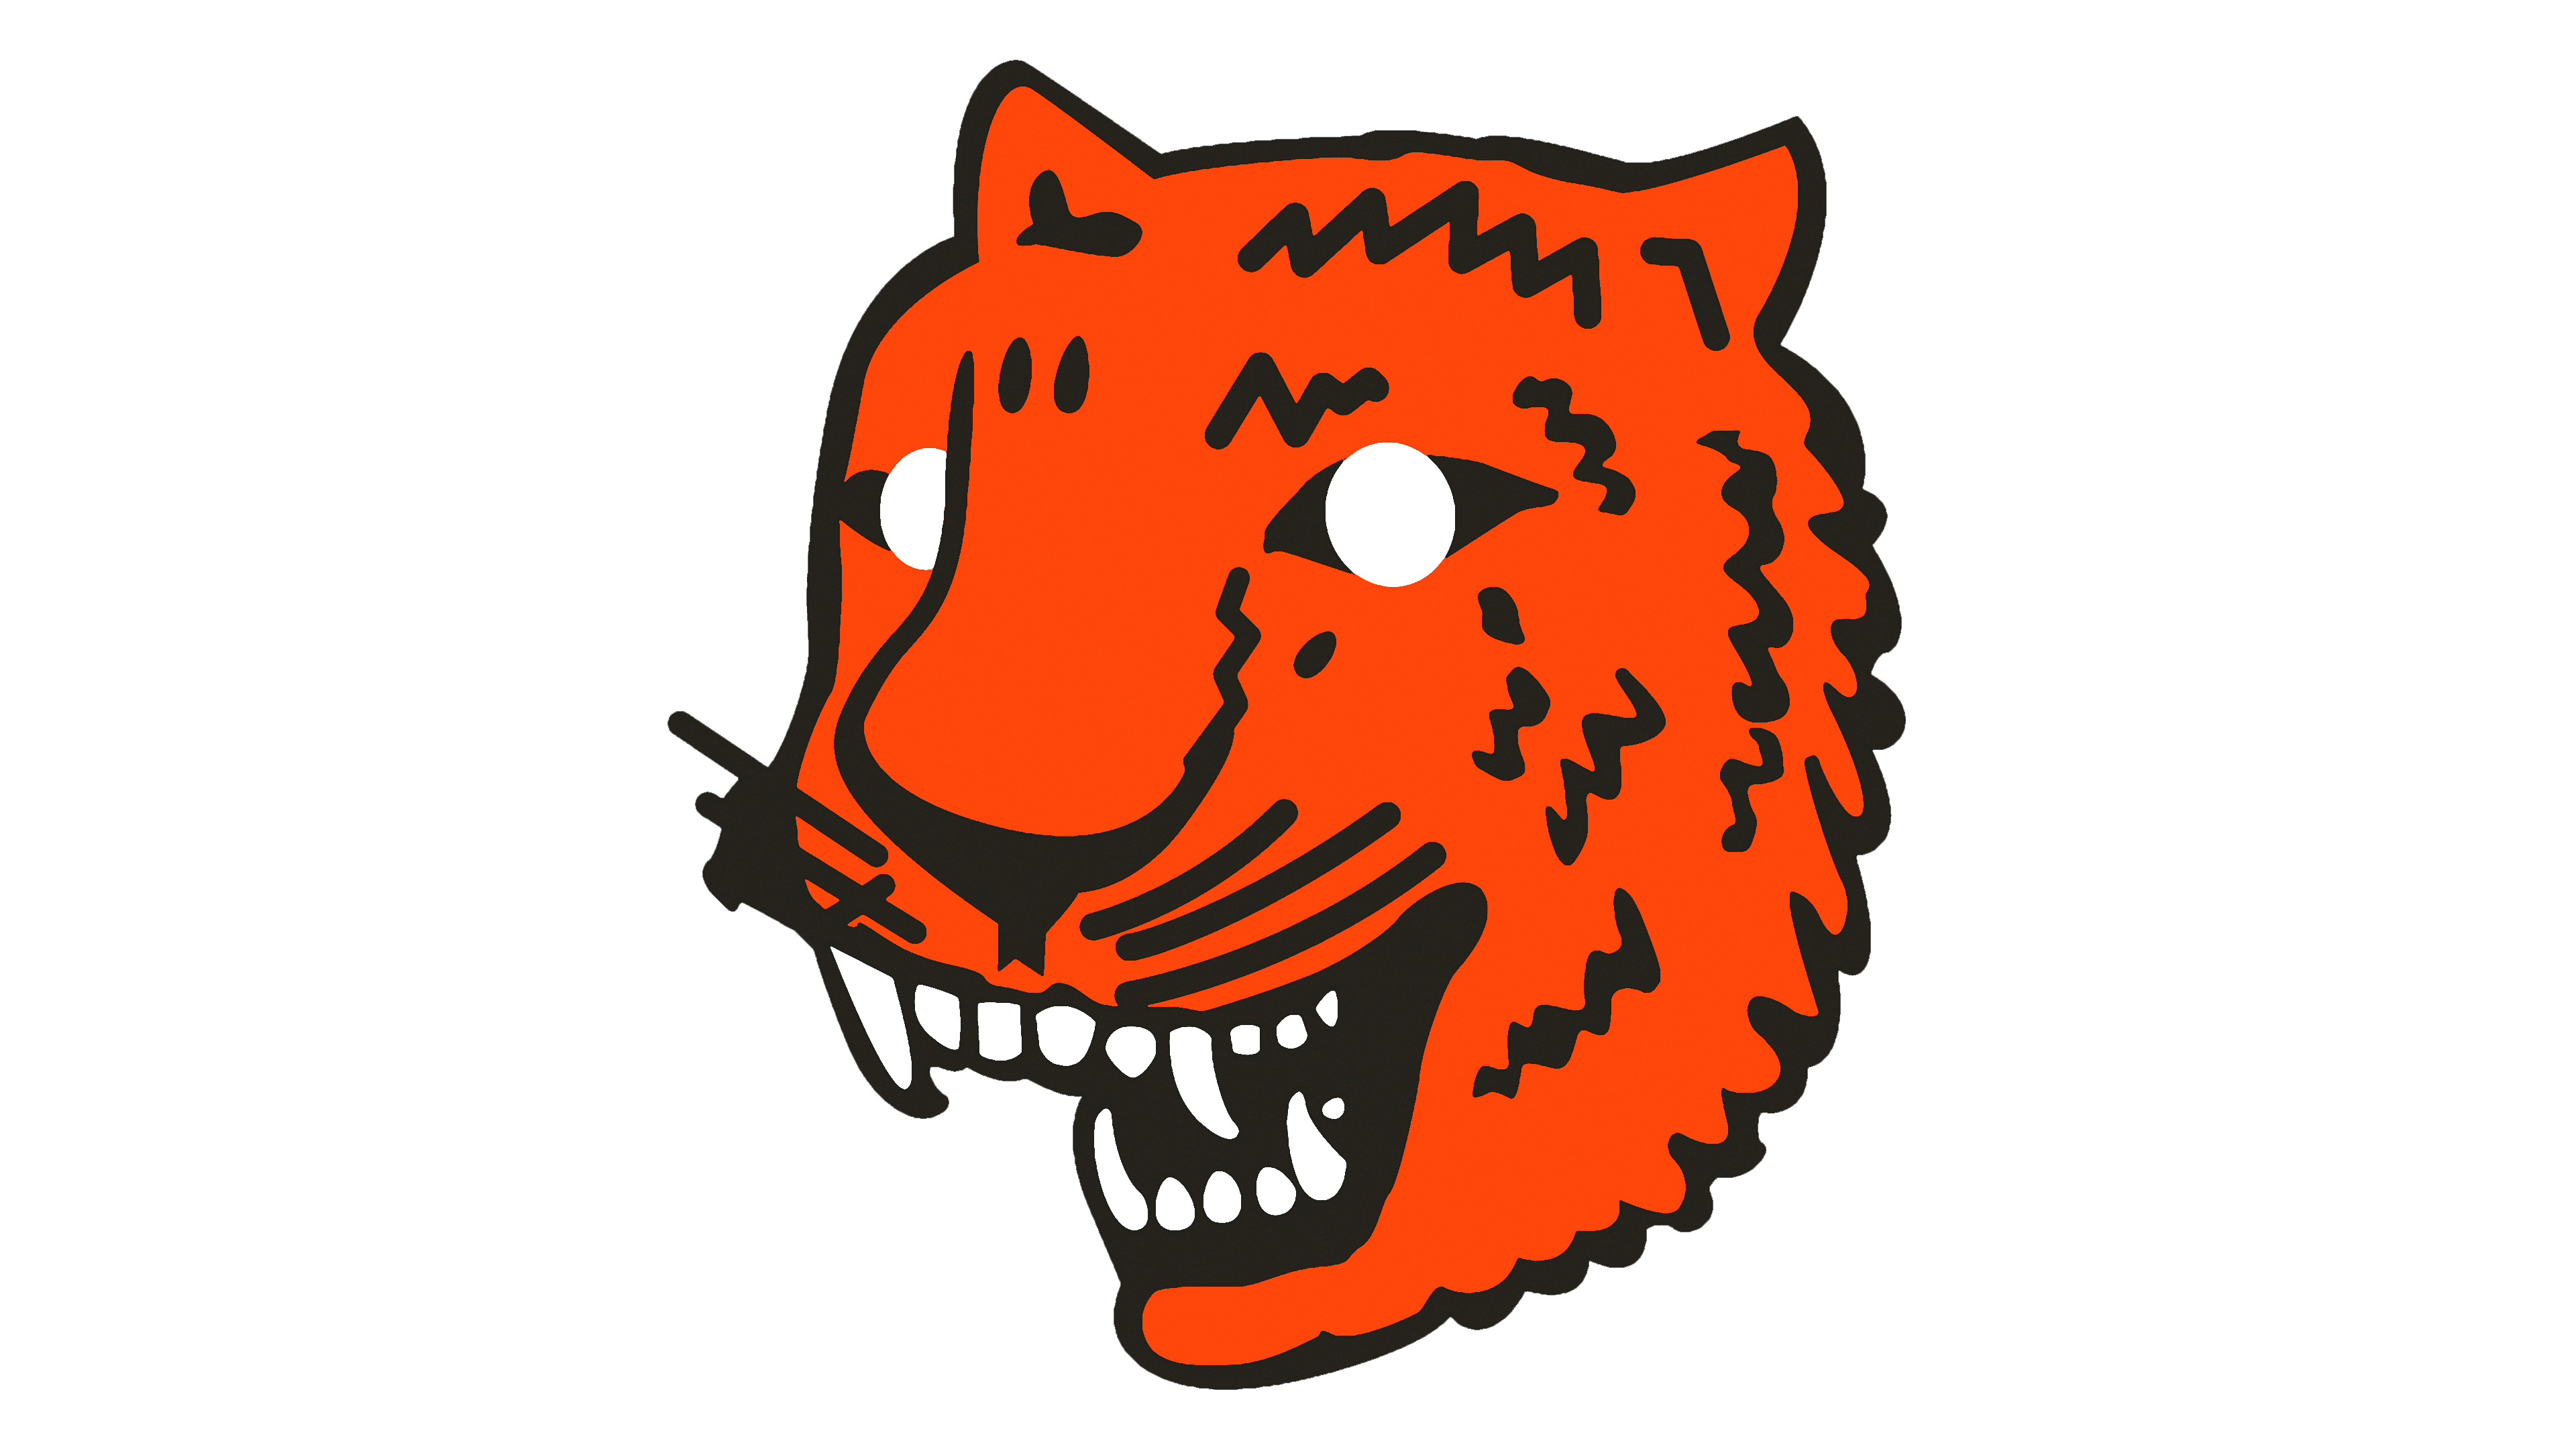 Detroit Tigers Logo History